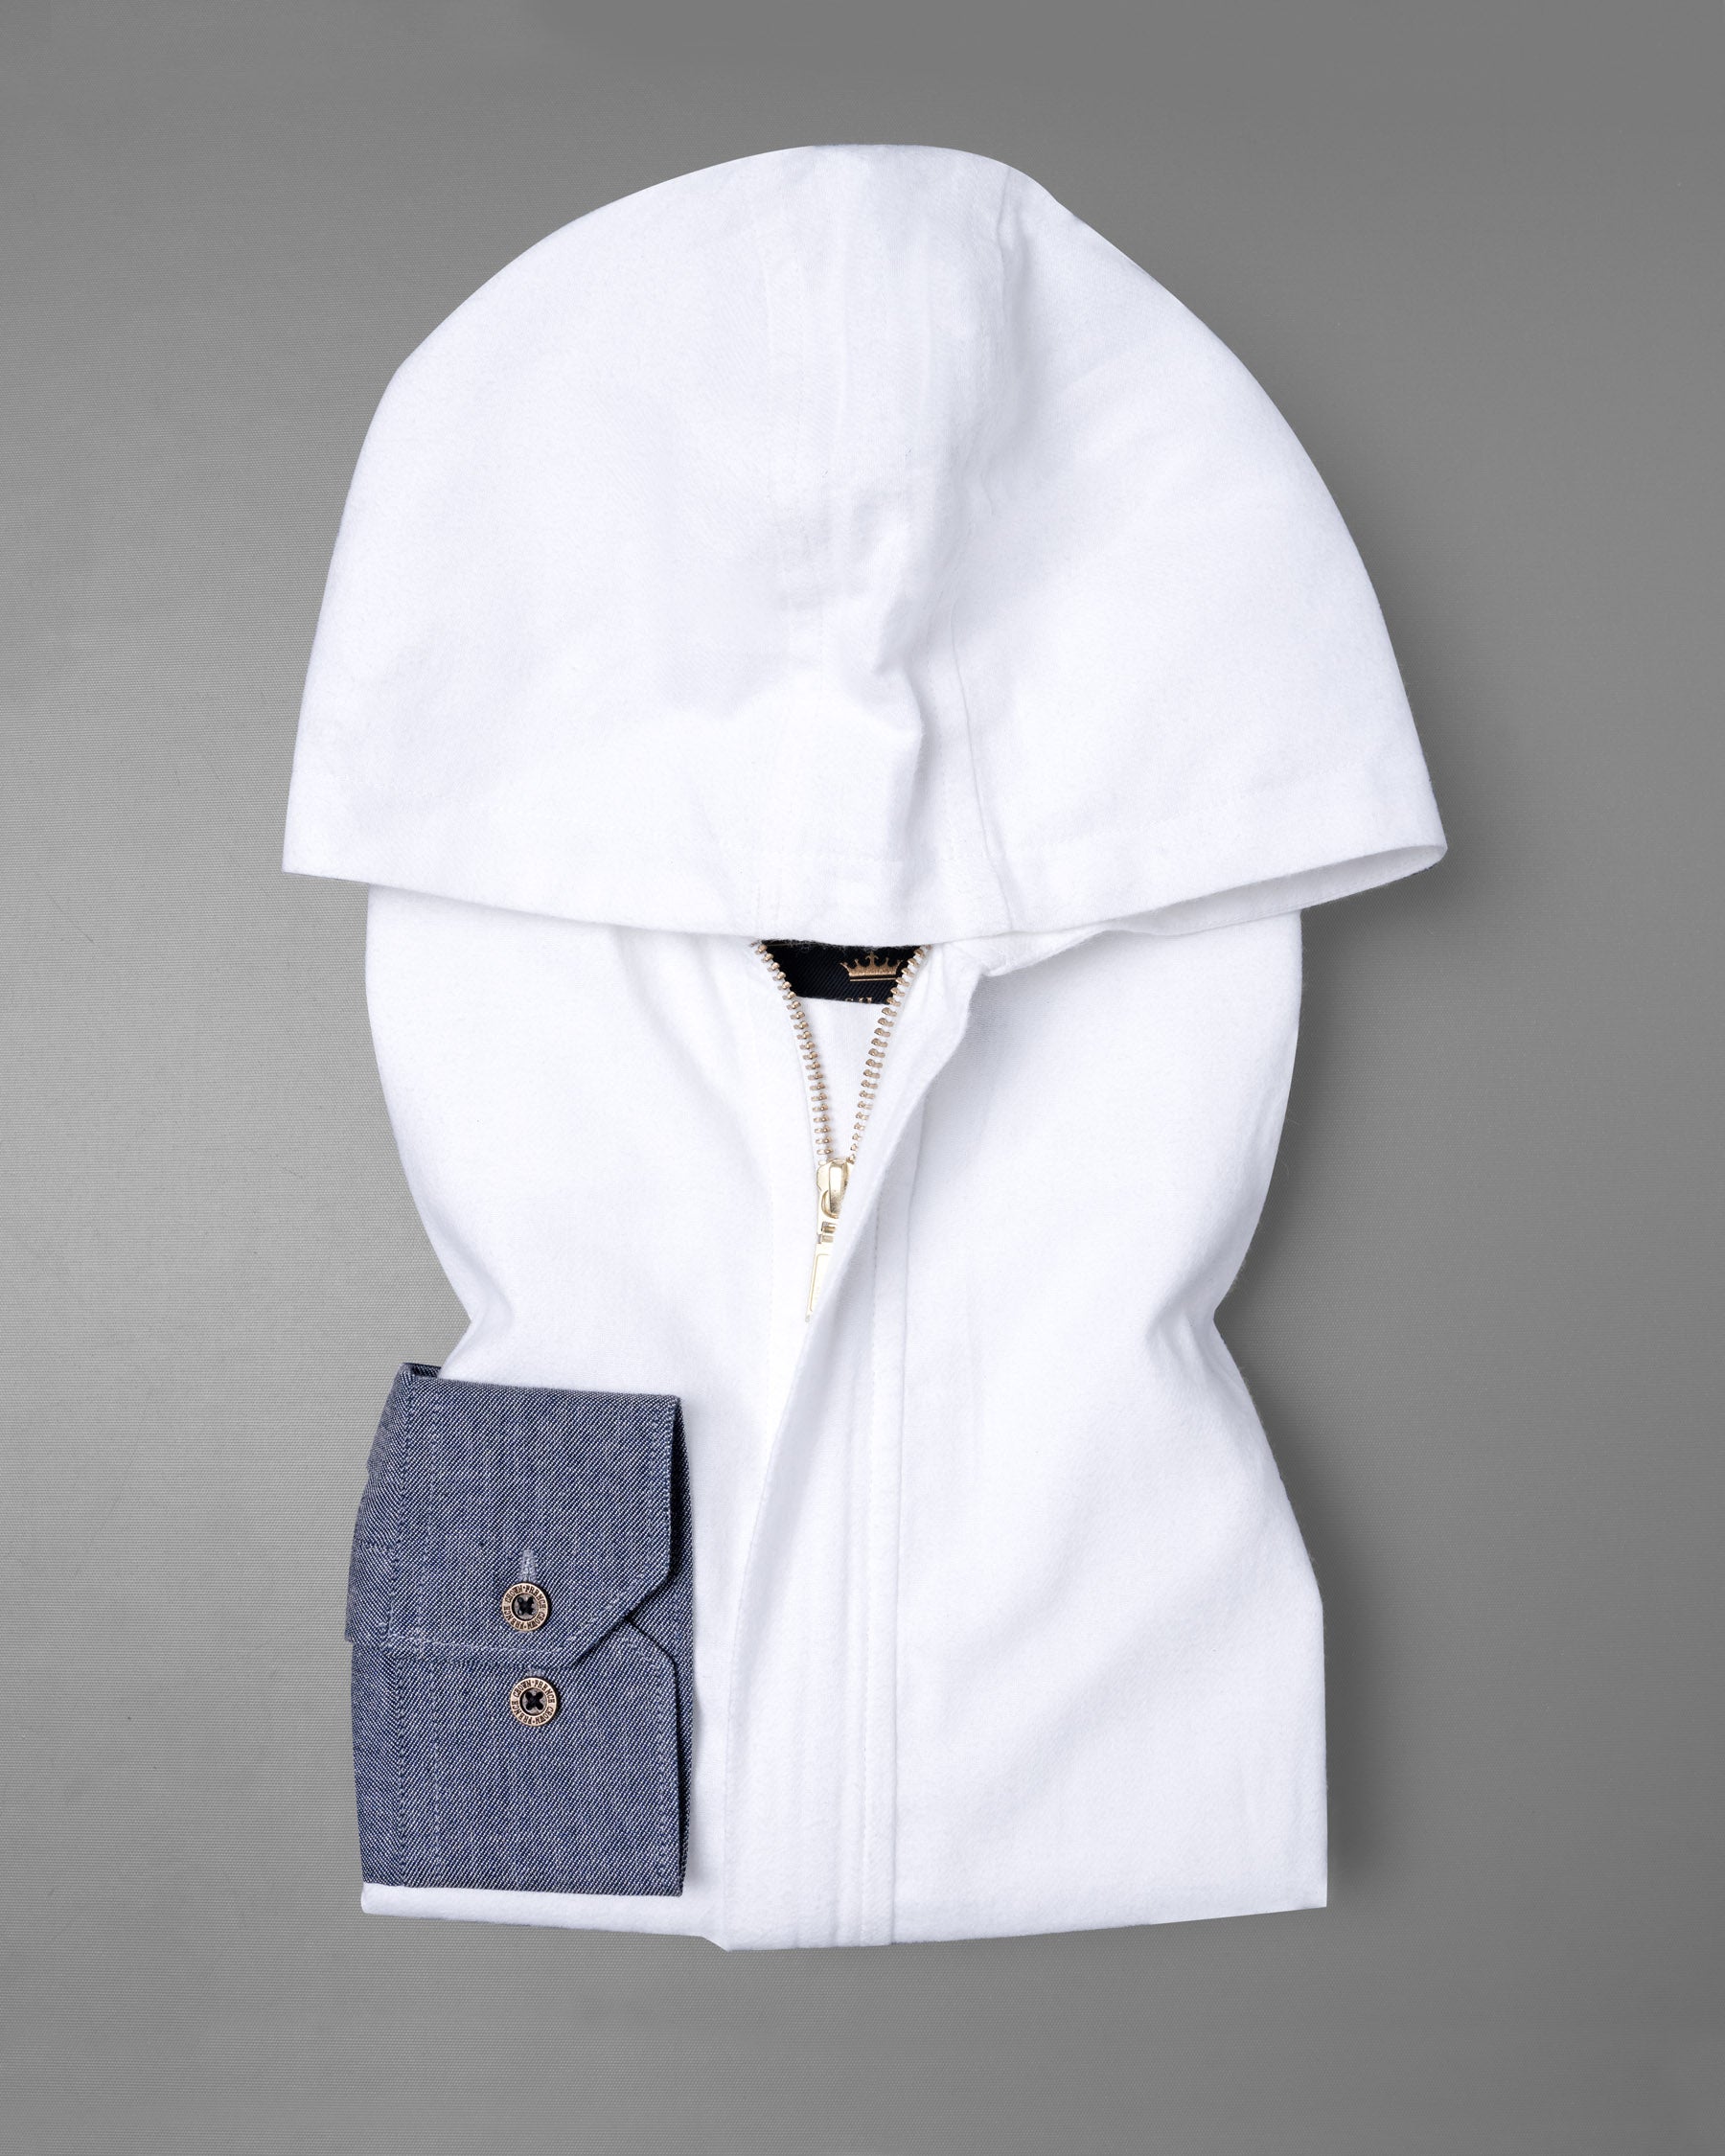 Half White half fiord Blue Royal Oxford Hoodie Jacket